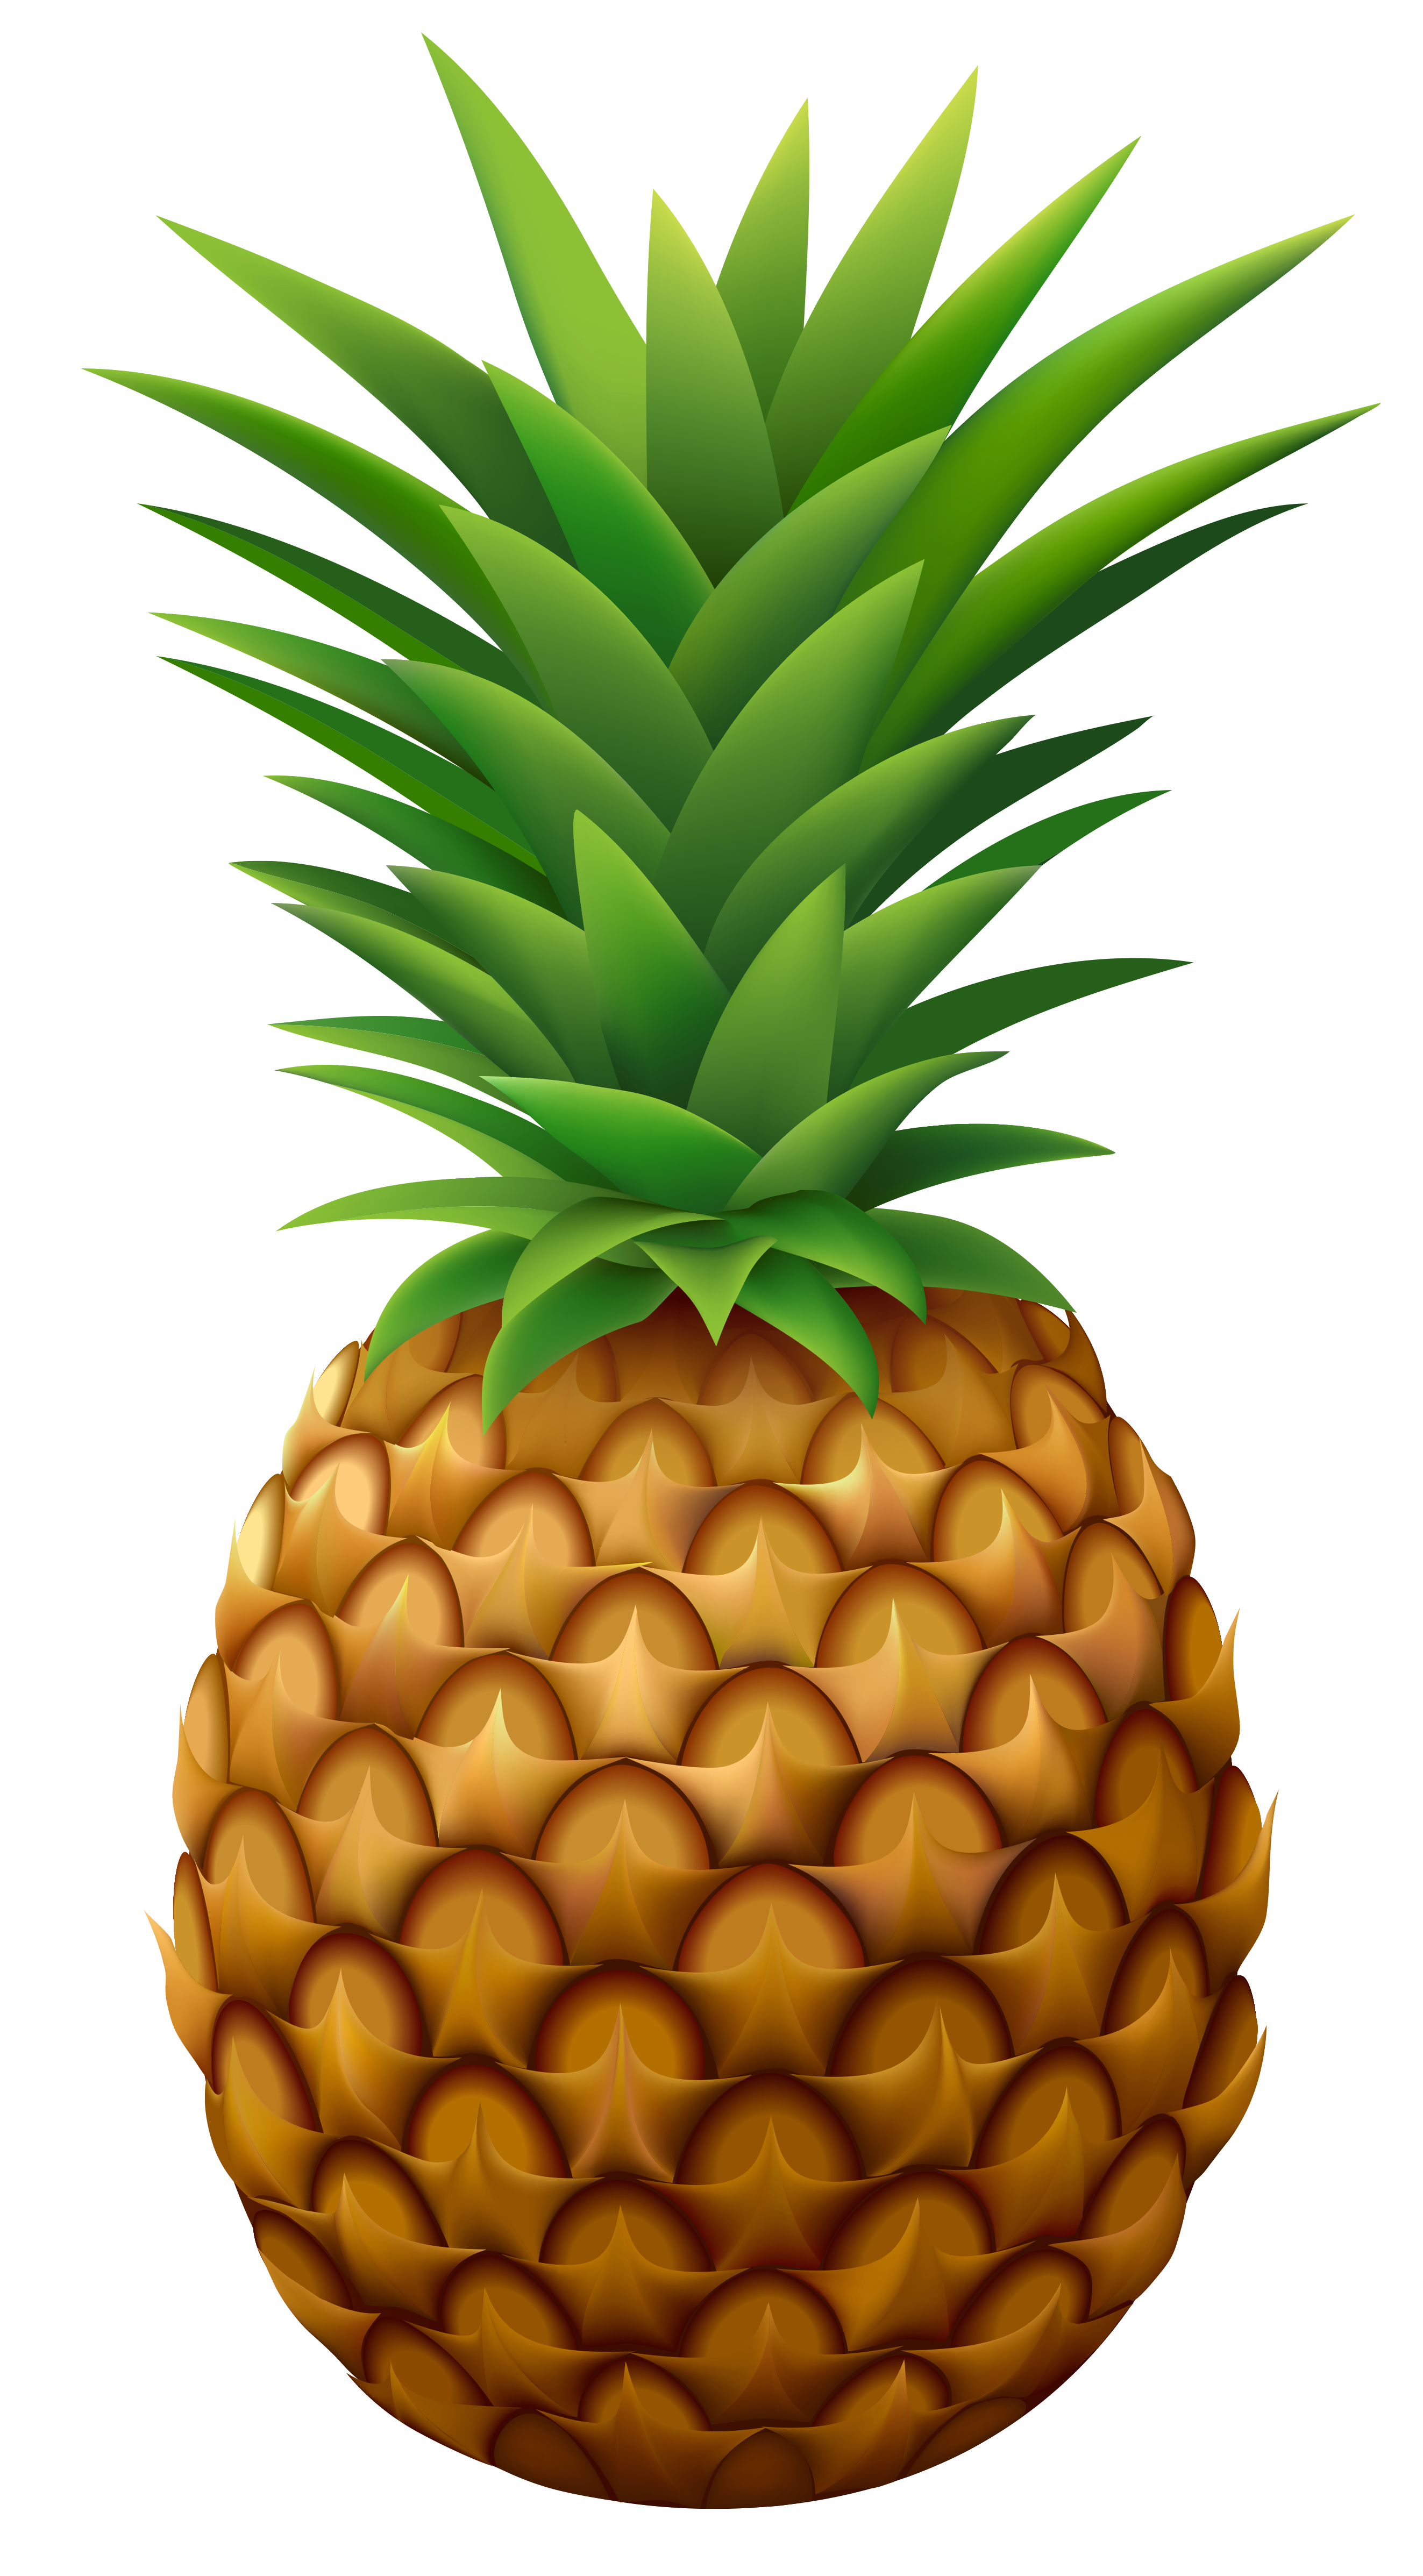 Pineapple png vector image. Coconut clipart green papaya